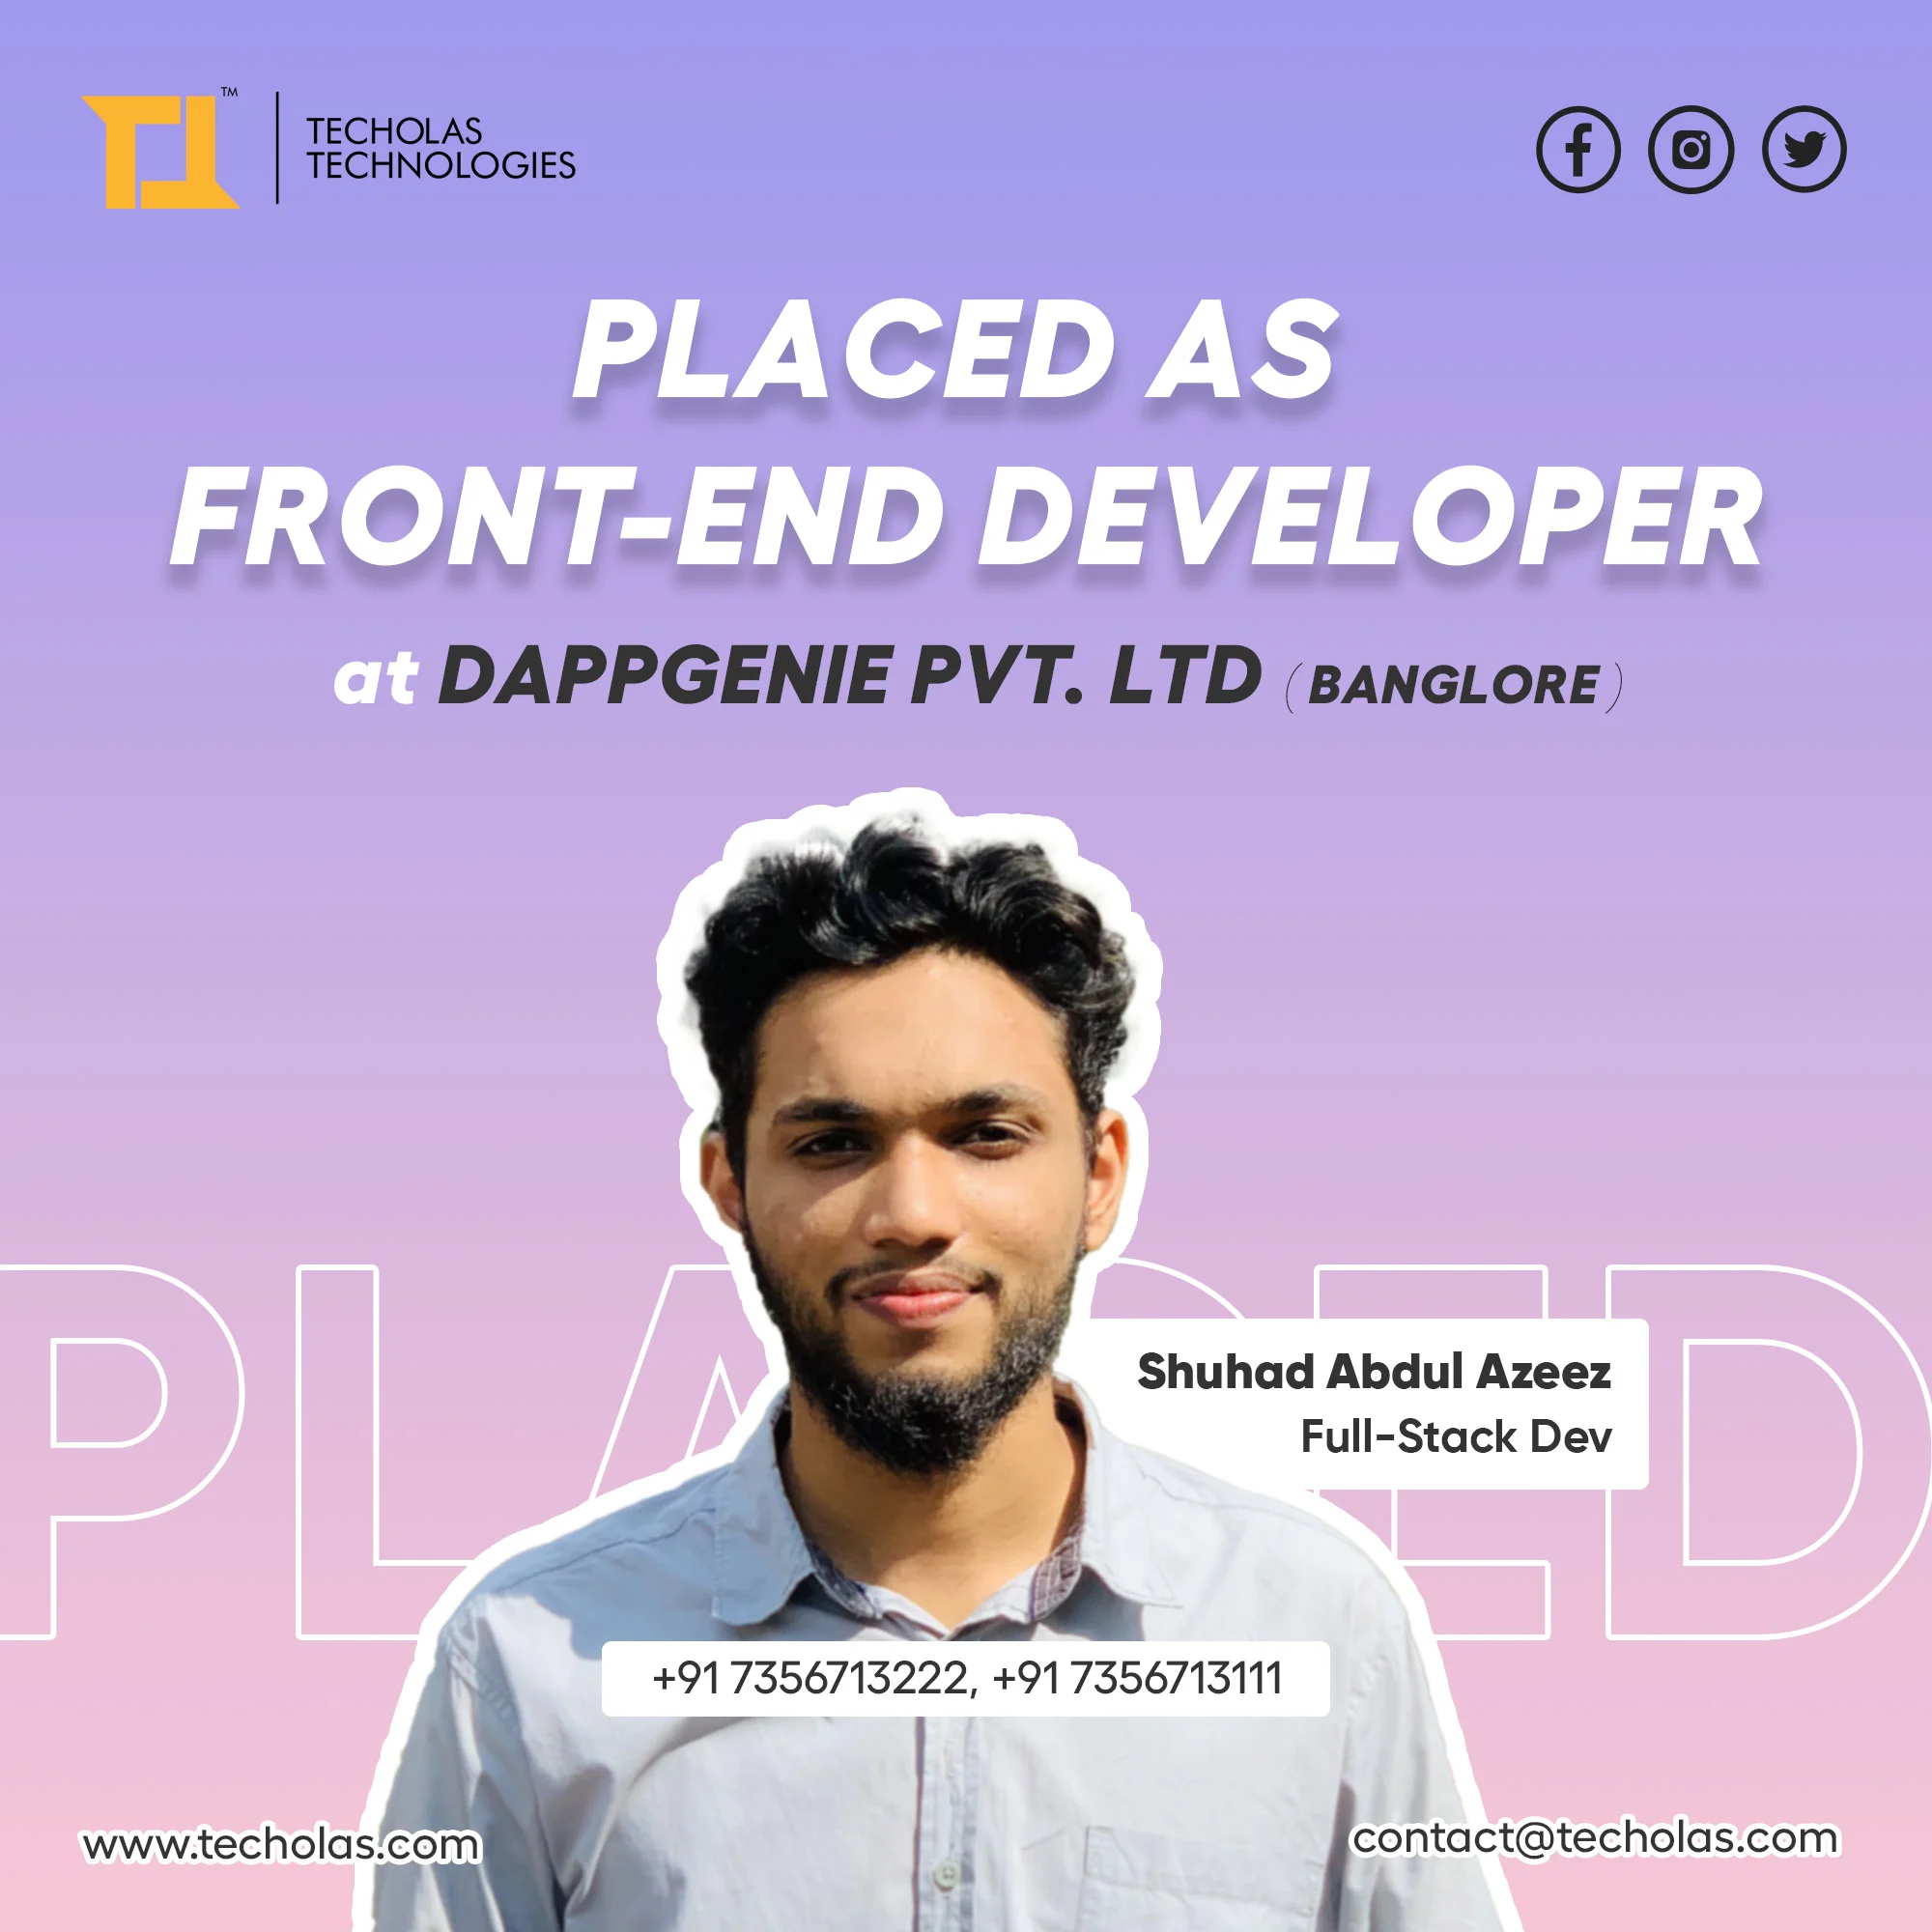 Techolas Placements - Shuhad Abdul Azeez placed at Dappgenie Pvt. Ltd. as Full-Stack Developer